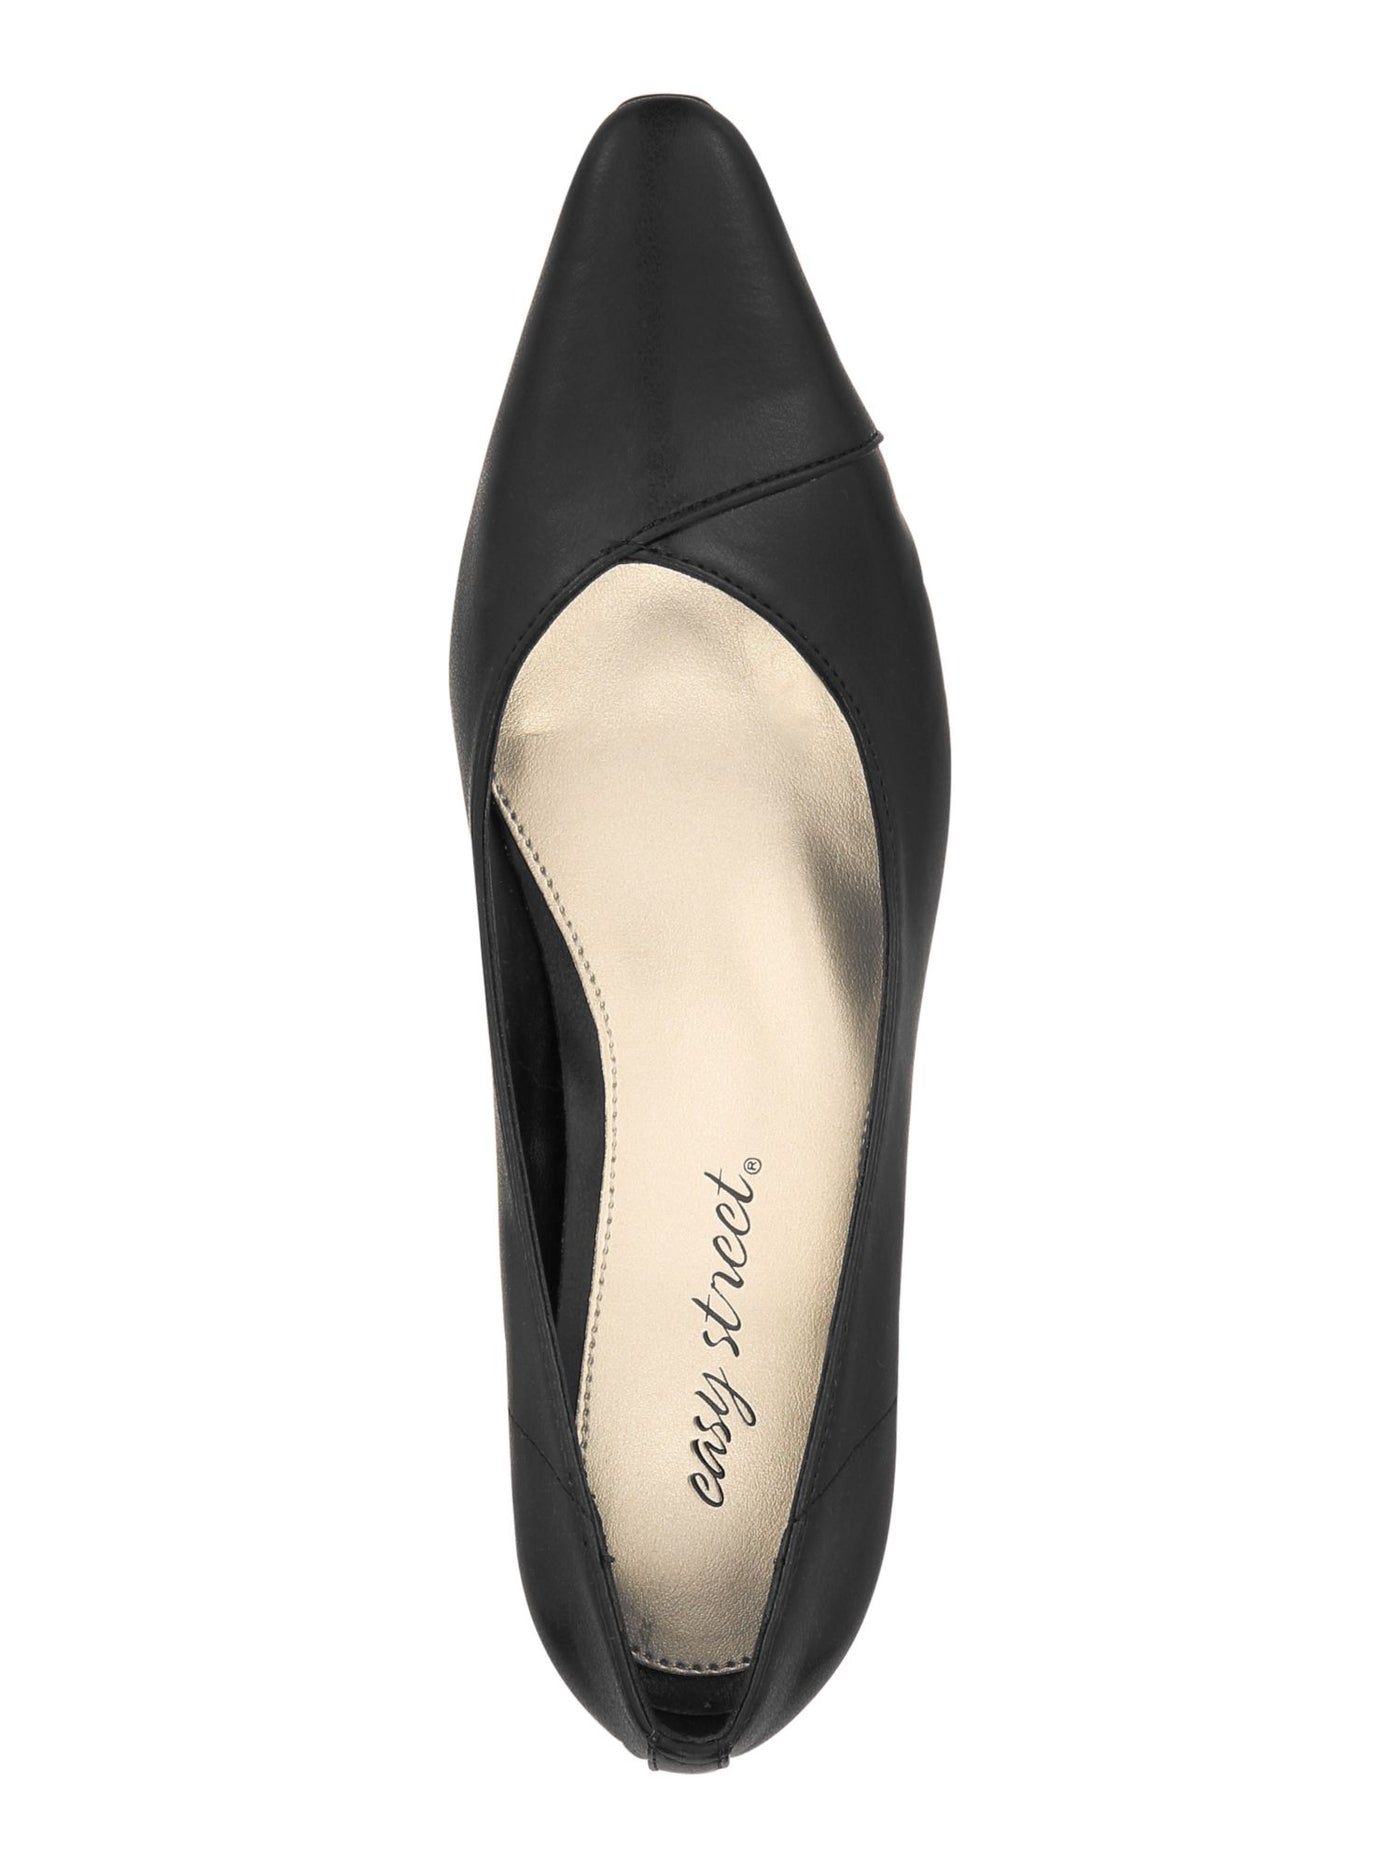 EASY STREET Womens Black Cushioned Chiffon Pointed Toe Kitten Heel Slip On Dress Pumps Shoes 9.5 M